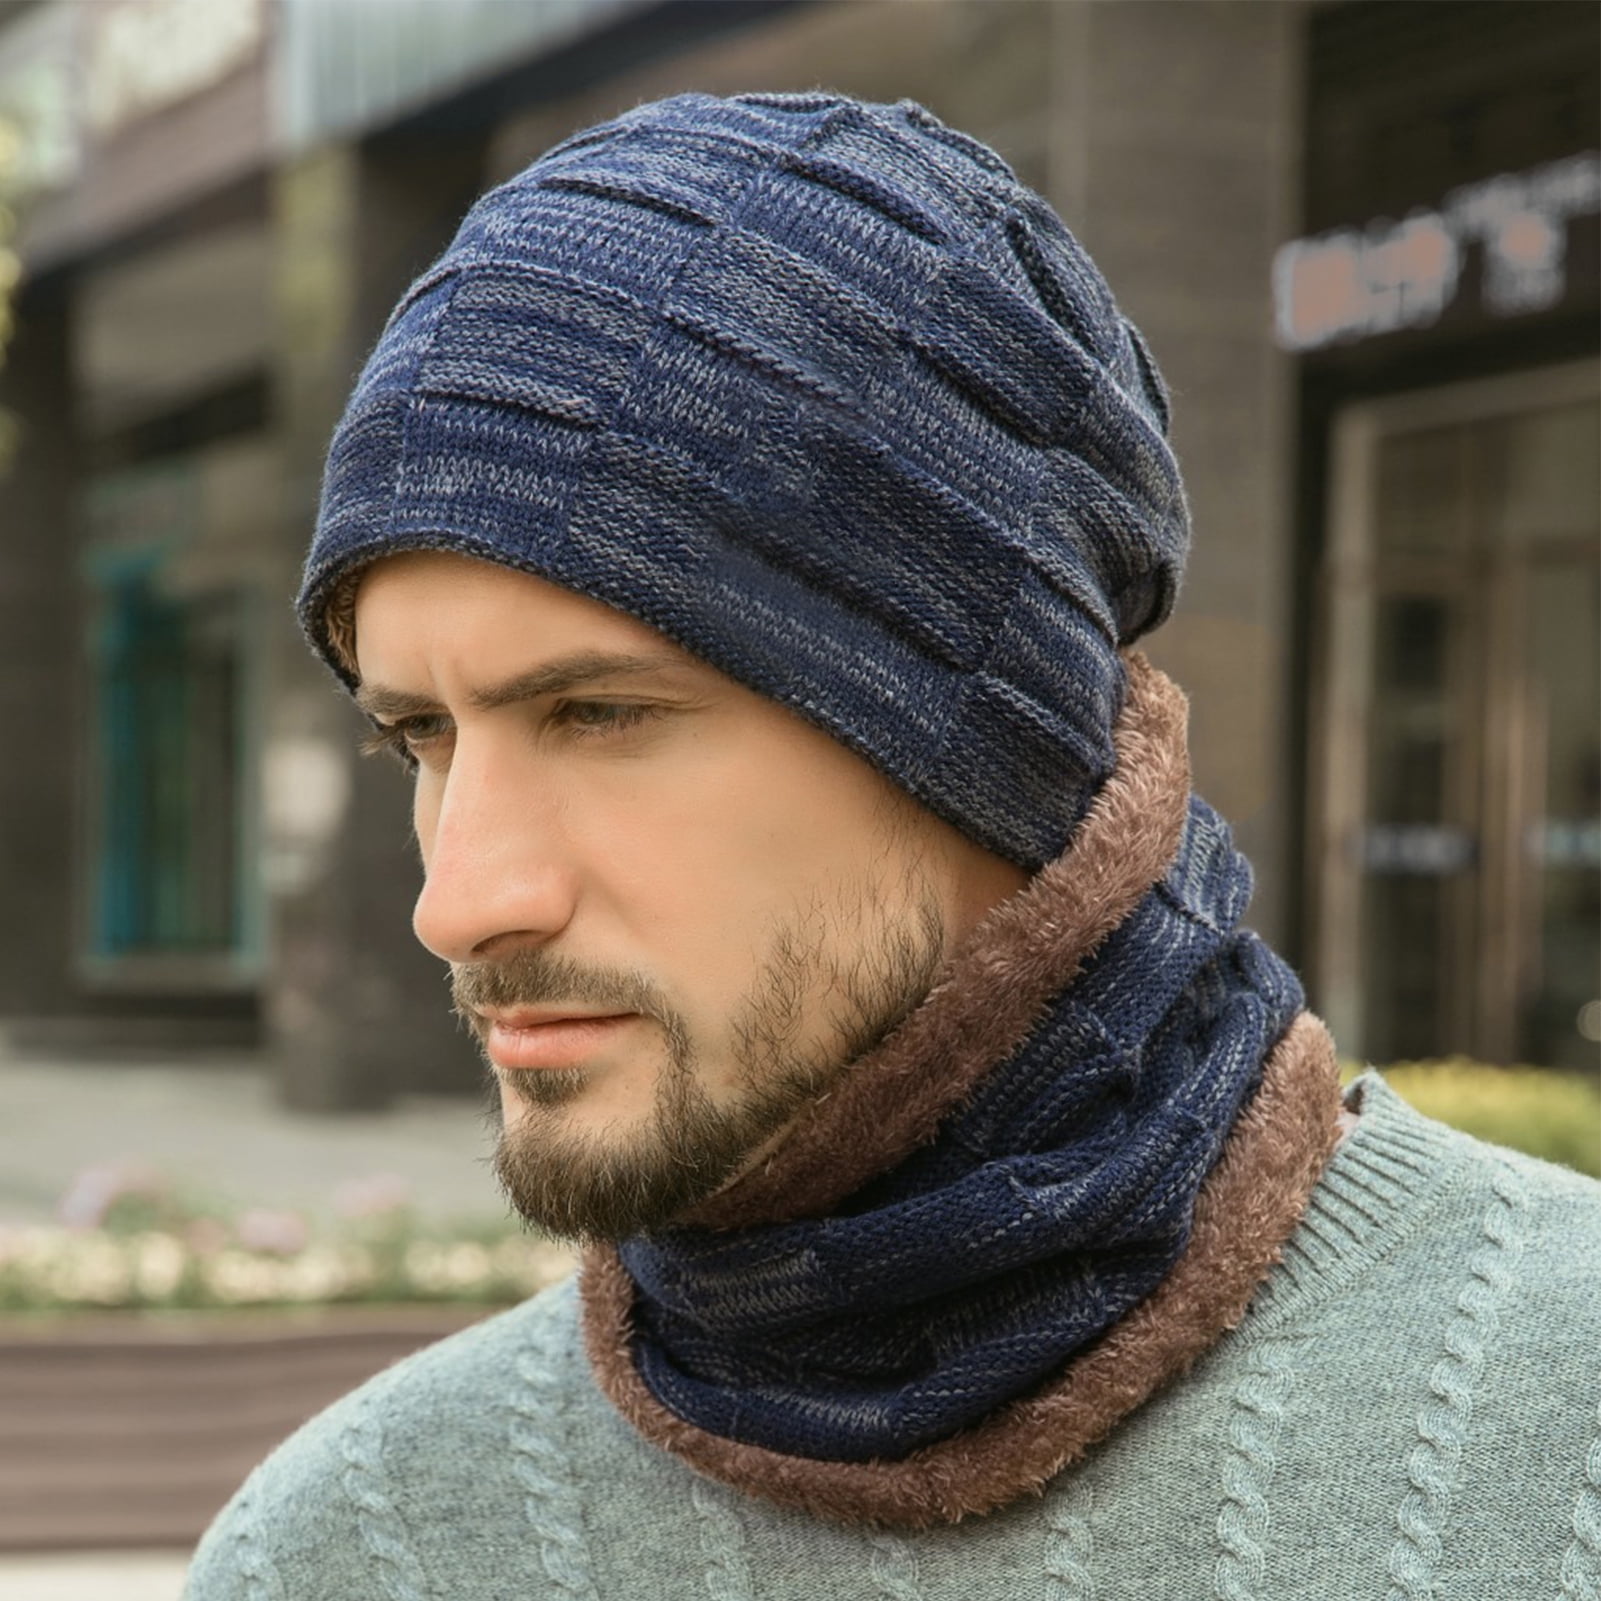 Horizon-t Plaid Unisex 100% Acrylic Knitting Hat Cap Fashion Beanie Hat